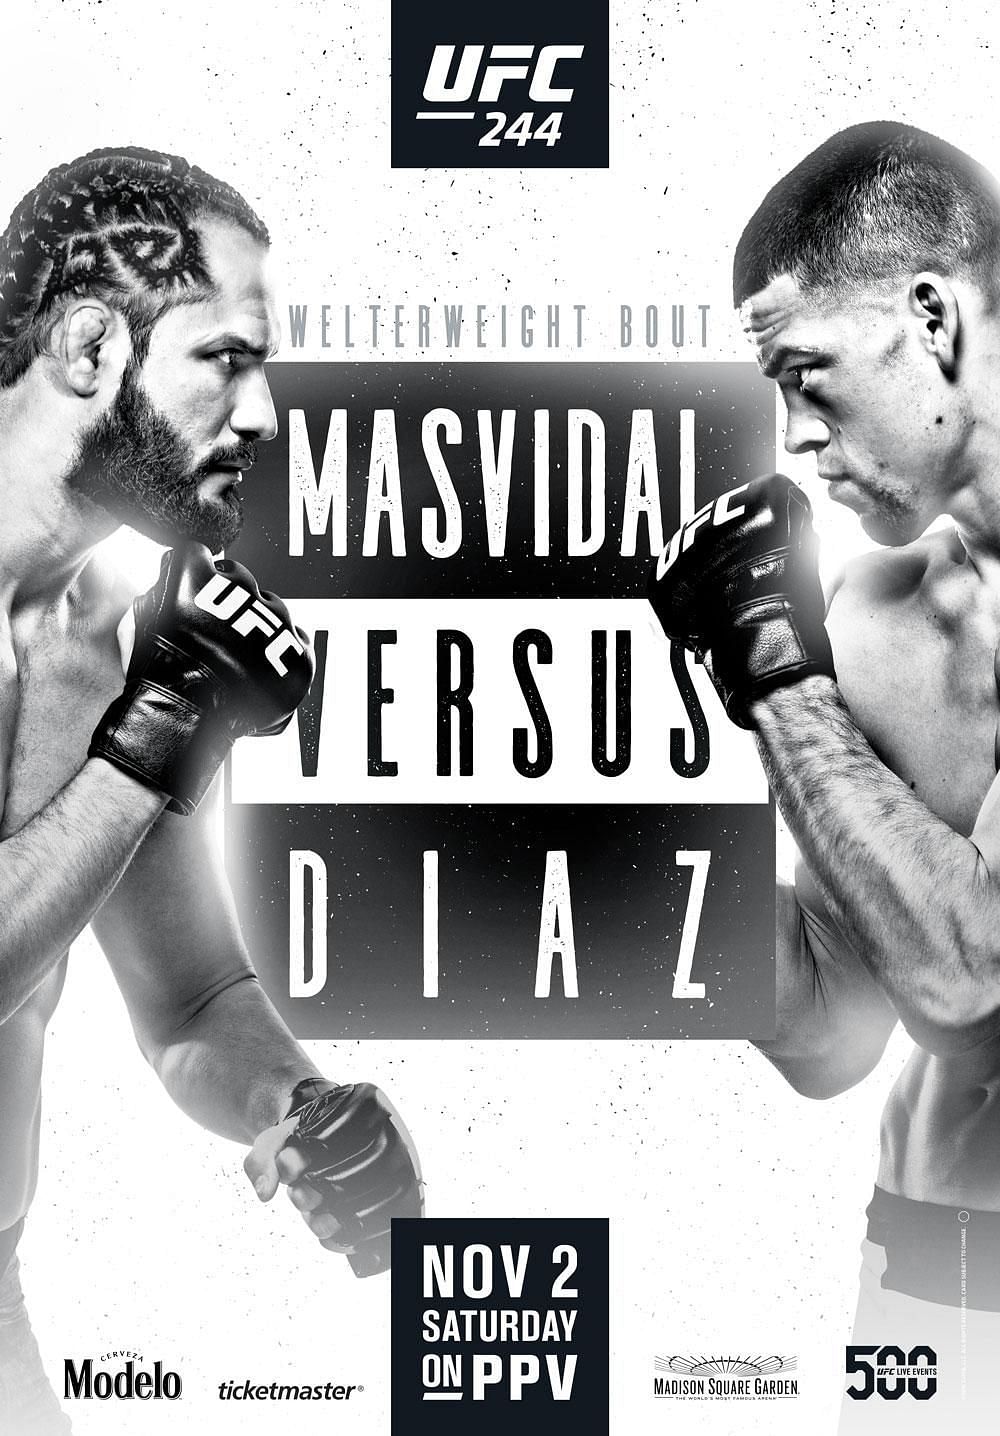 Masvidal vs. Diaz poster [Image via @espnmma on Instagram]